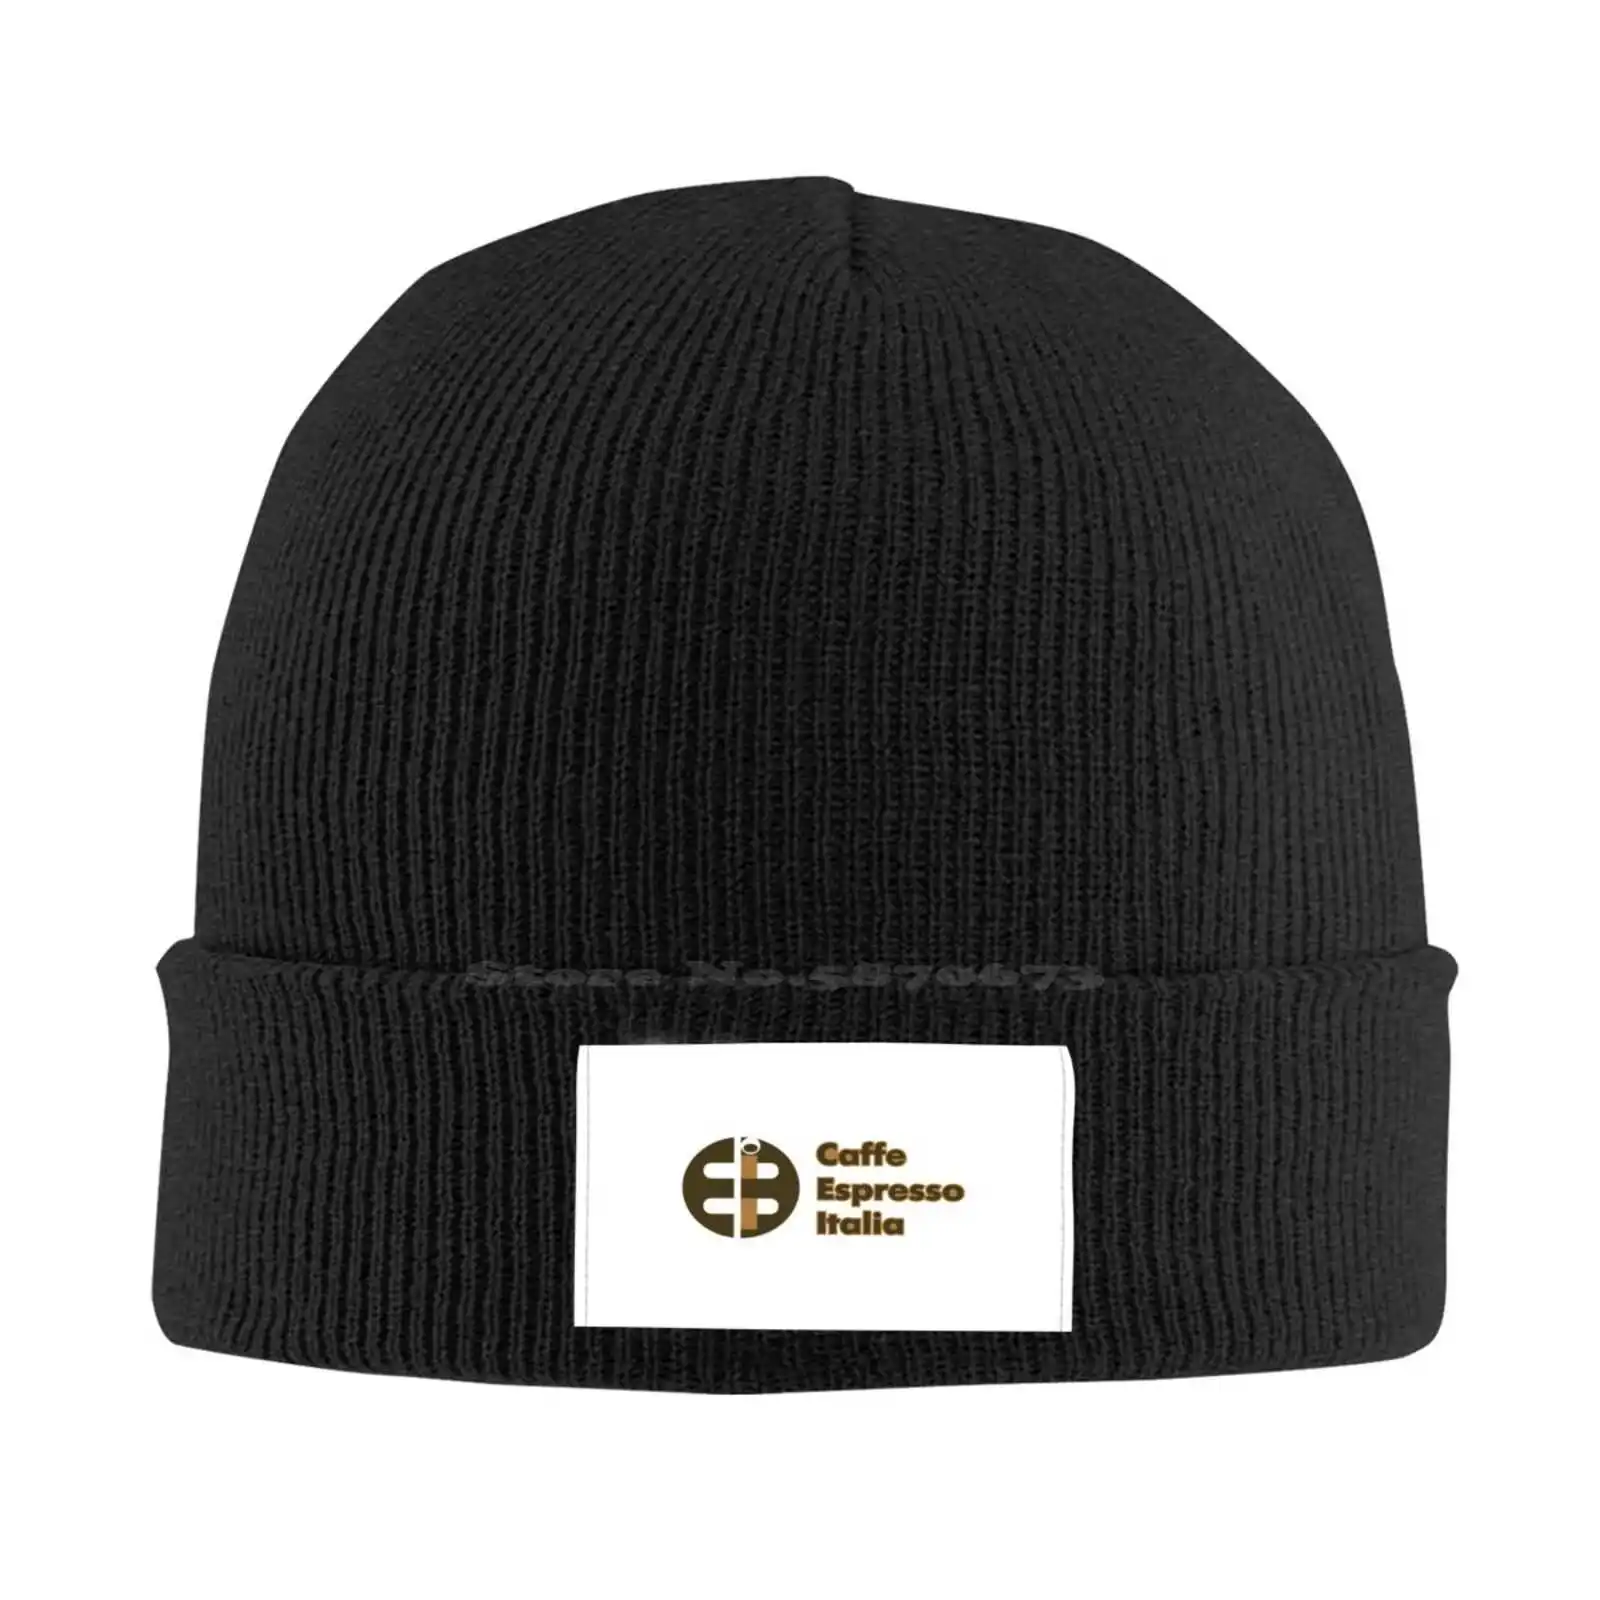 

Caffe Espresso Italia Logo Print Graphic Casual cap Baseball cap Knitted hat